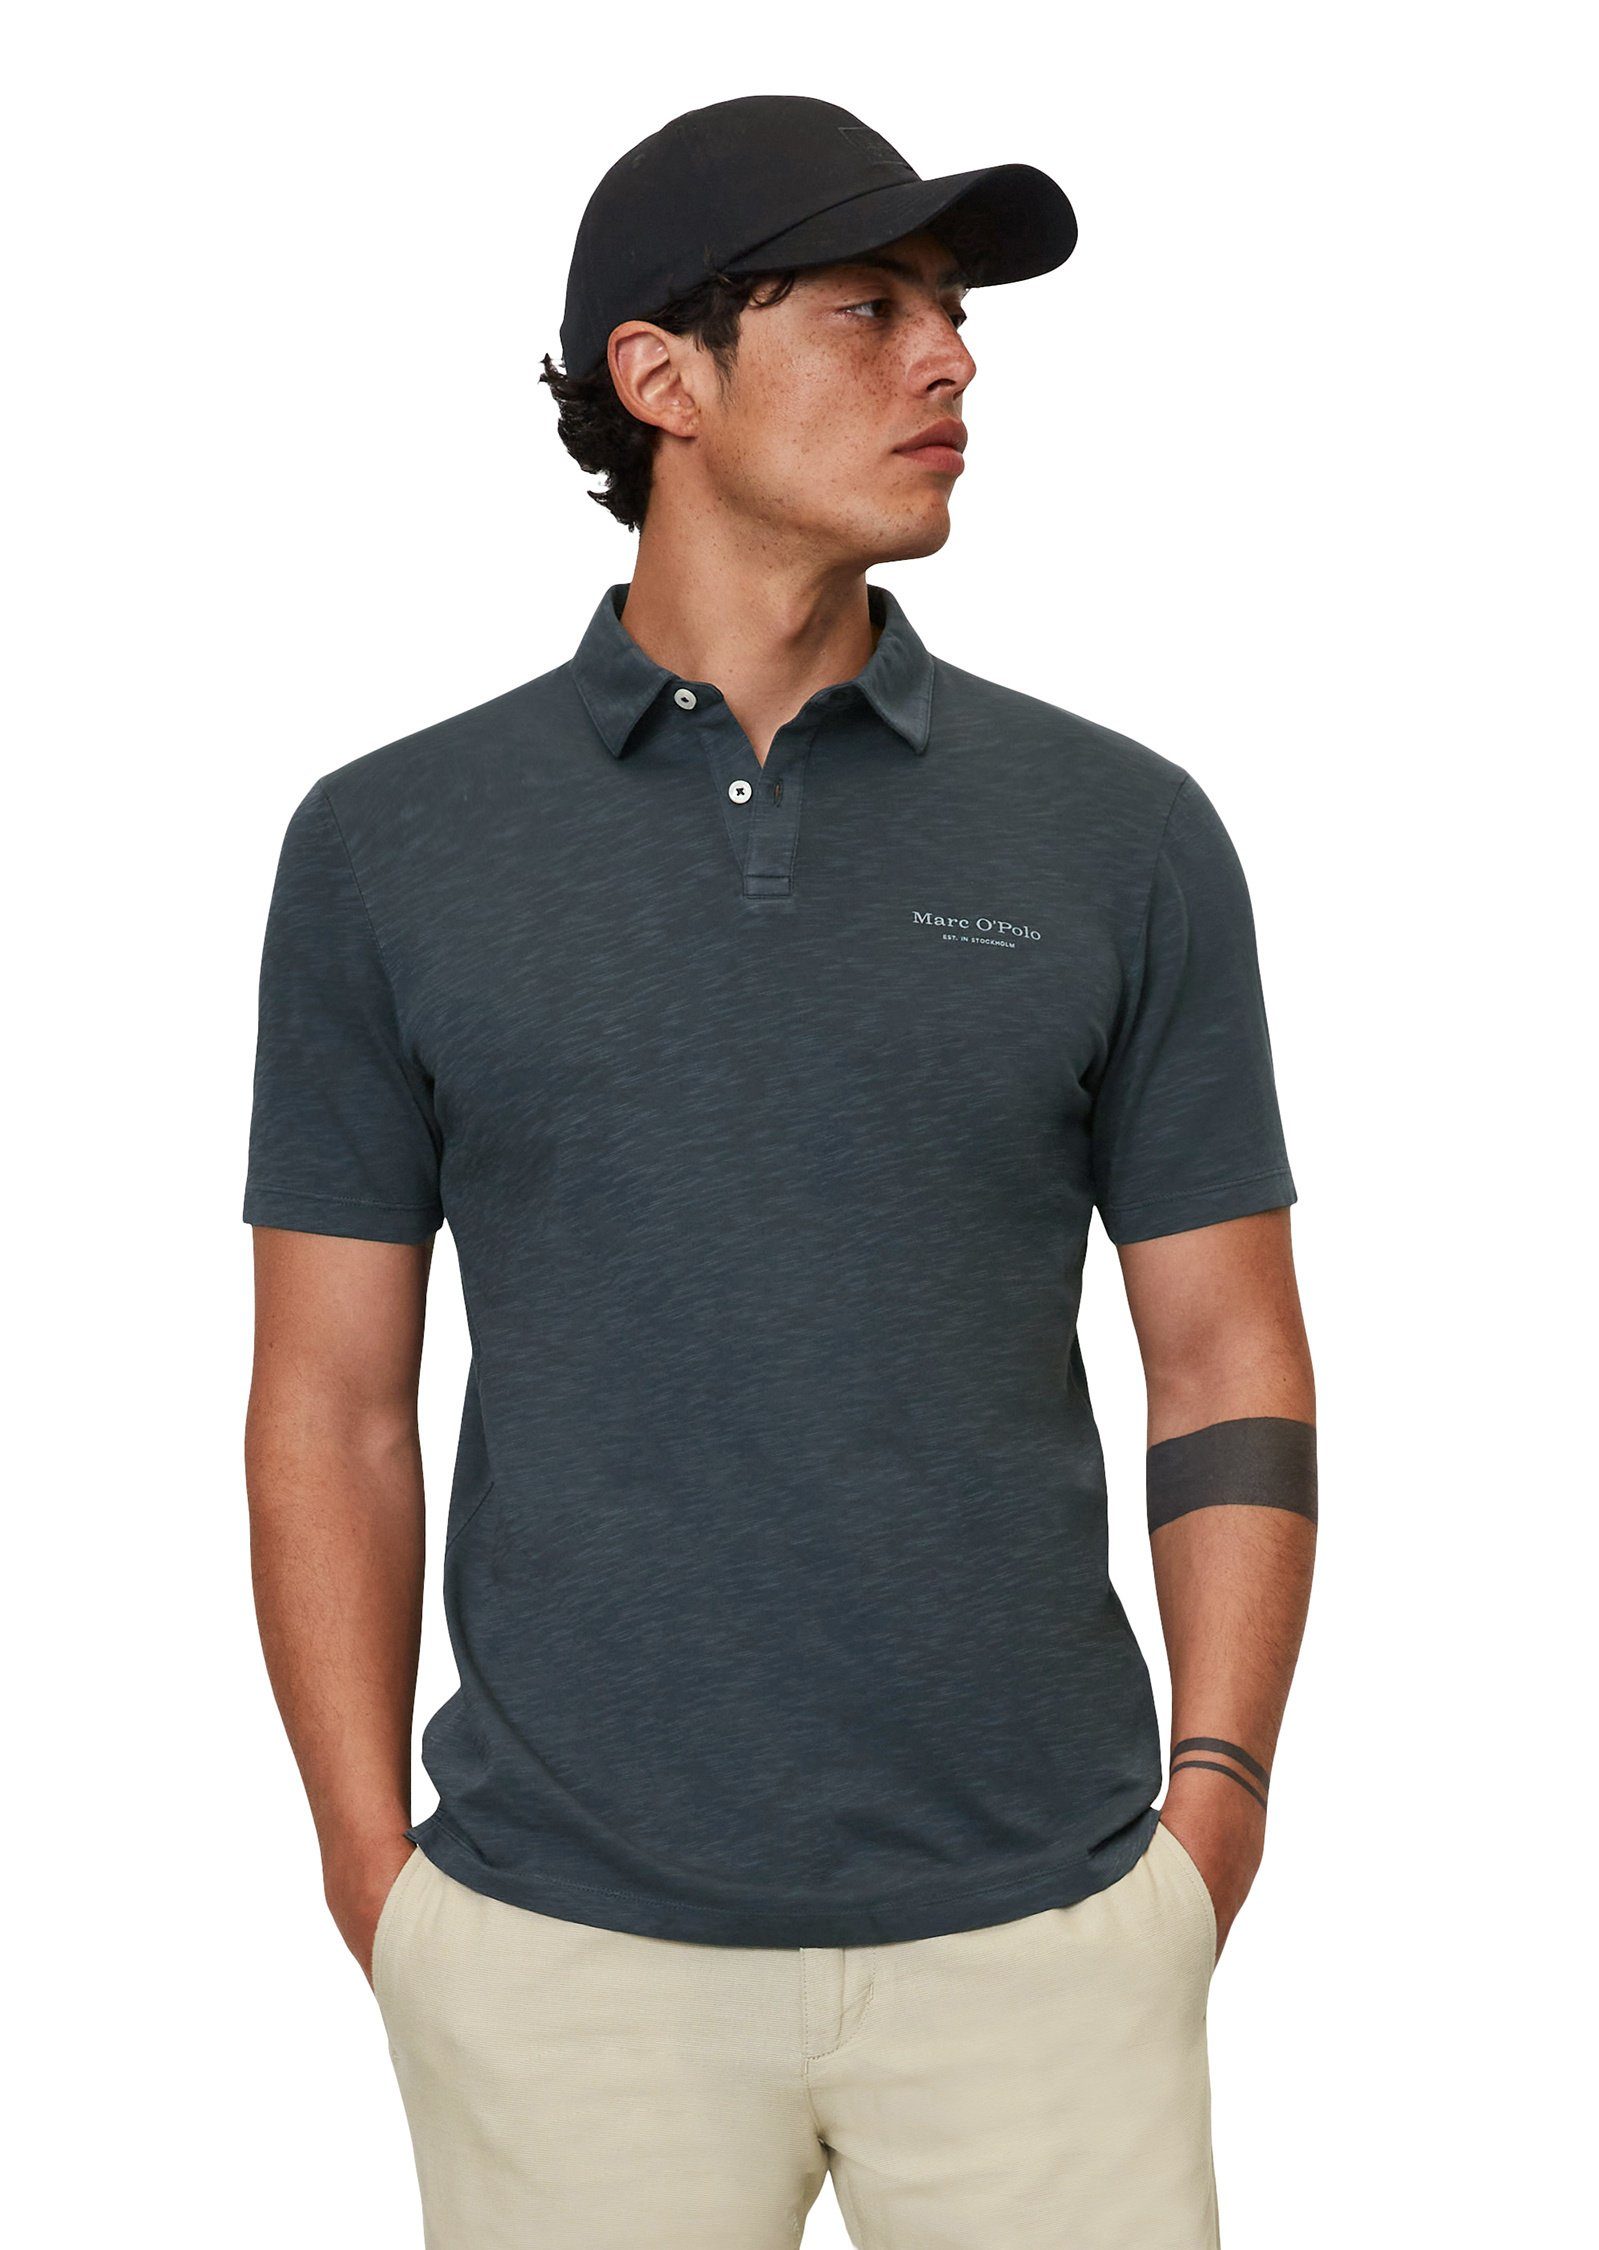 Marc O'Polo Poloshirt aus hochwertiger Bio-Baumwolle dunkelblau